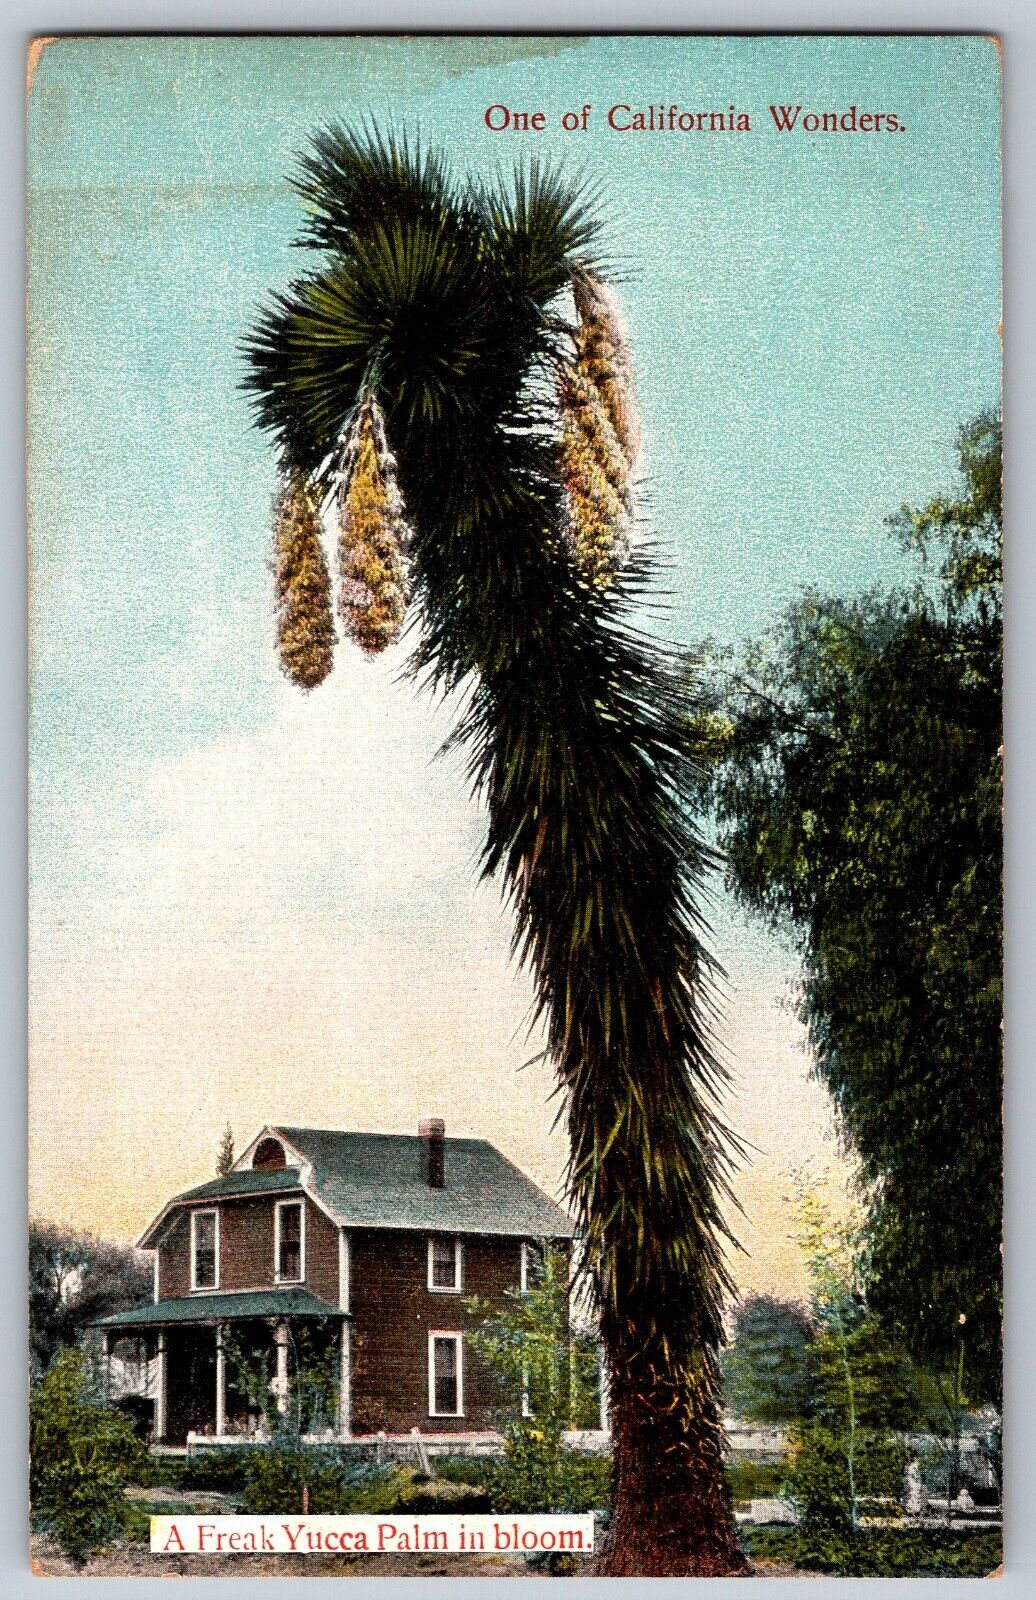 California - Yucca Palm Trees in Bloom - California Wonders - Vintage Postcard